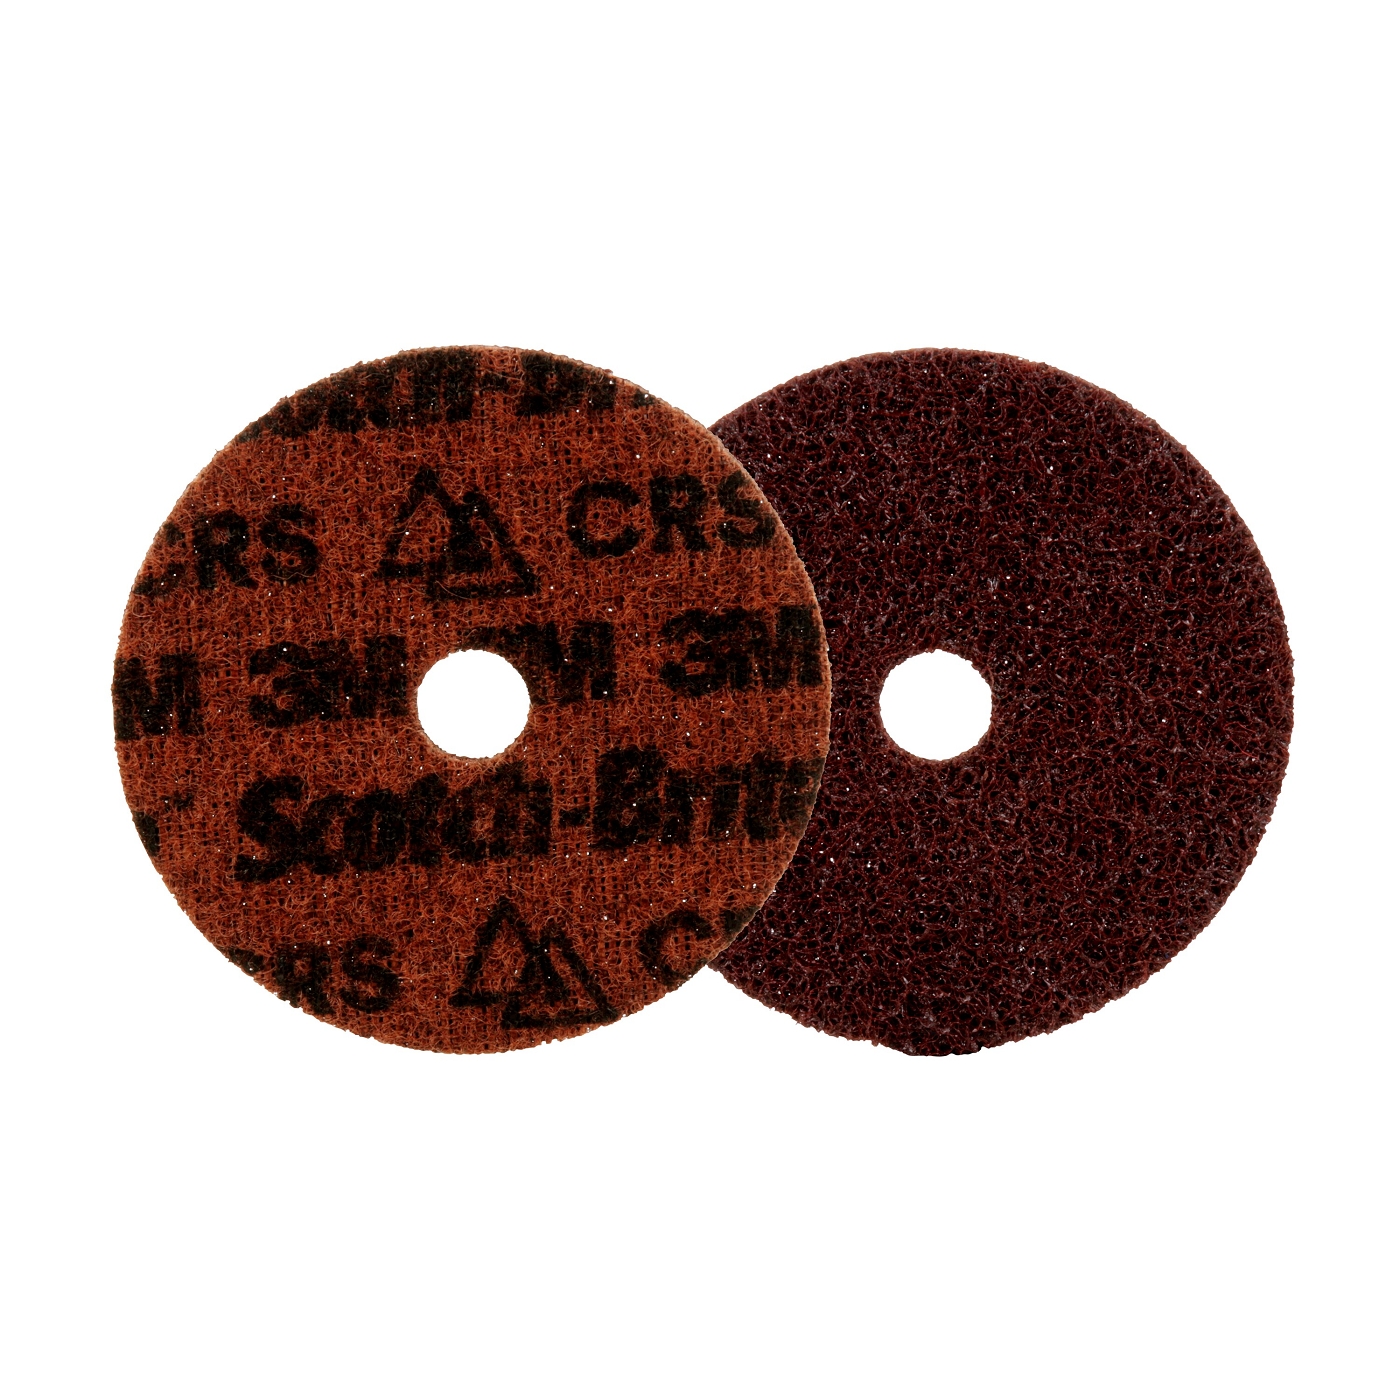 3M Scotch-Brite, disco di precisione in tessuto non tessuto, PN-DH, ruvido, 100 mm x 16 mm